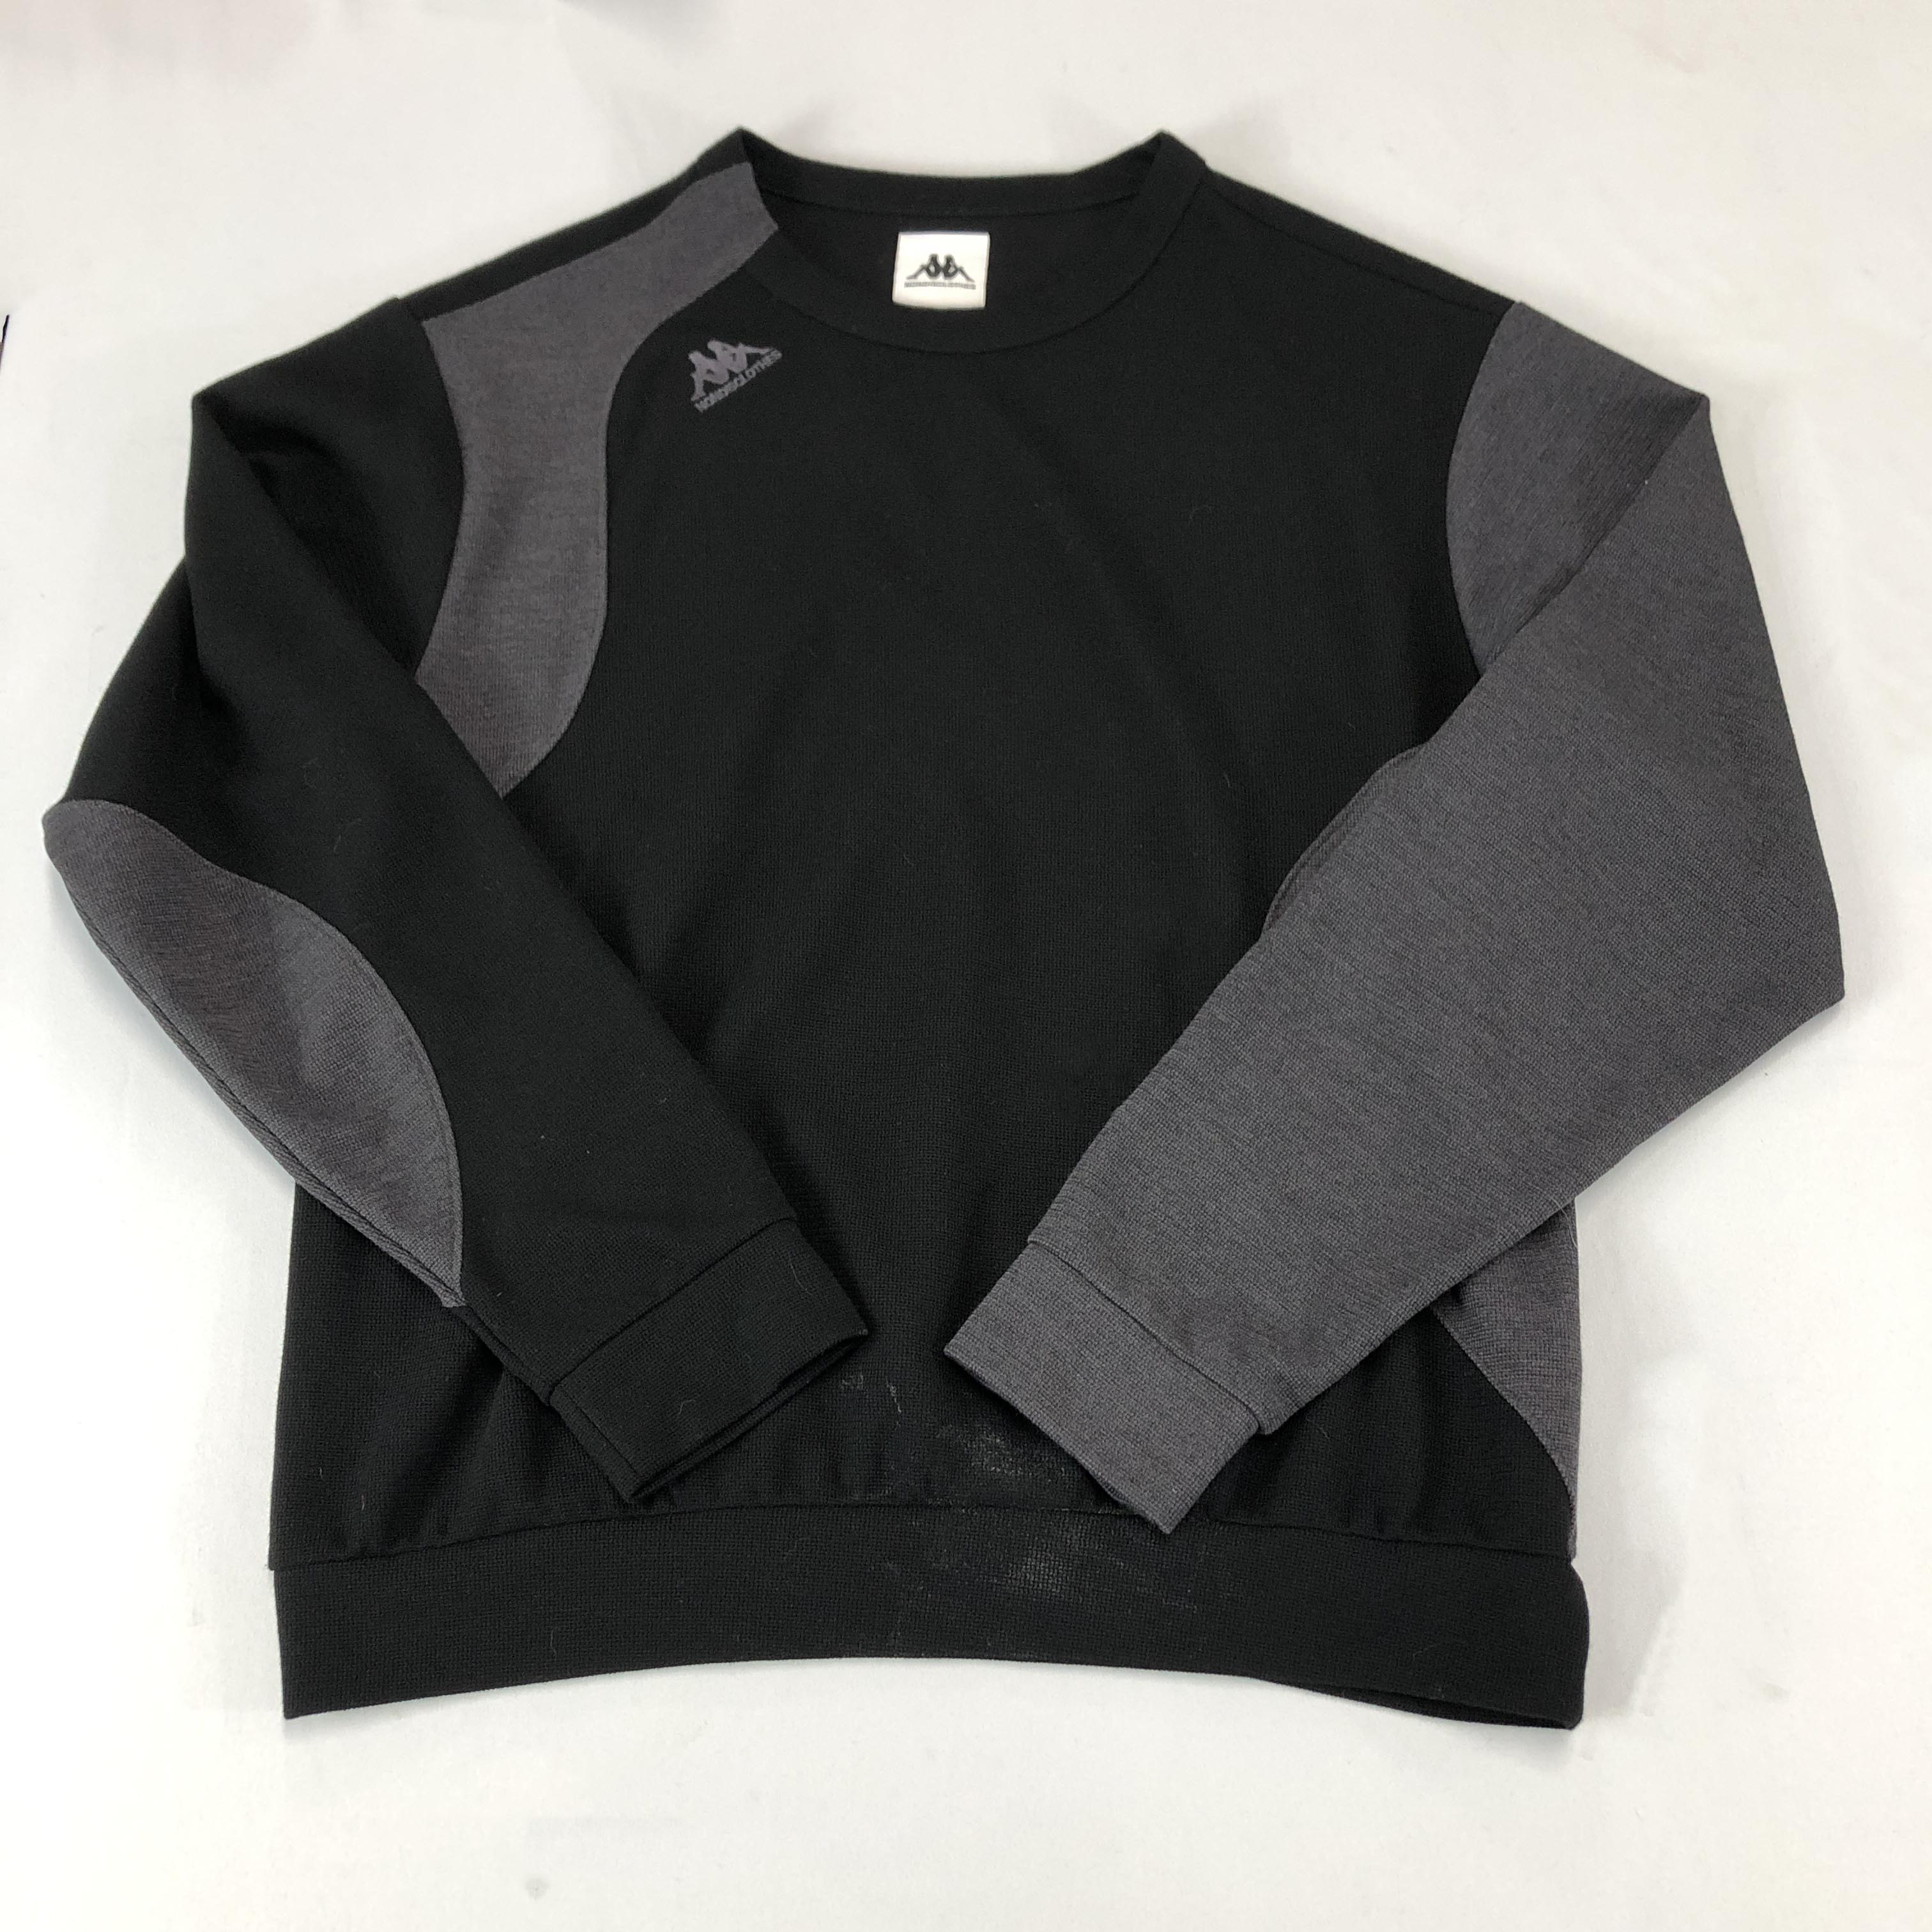 [Nondisclothes x Kappa] Black/Grey Sweat Shirts - Size L